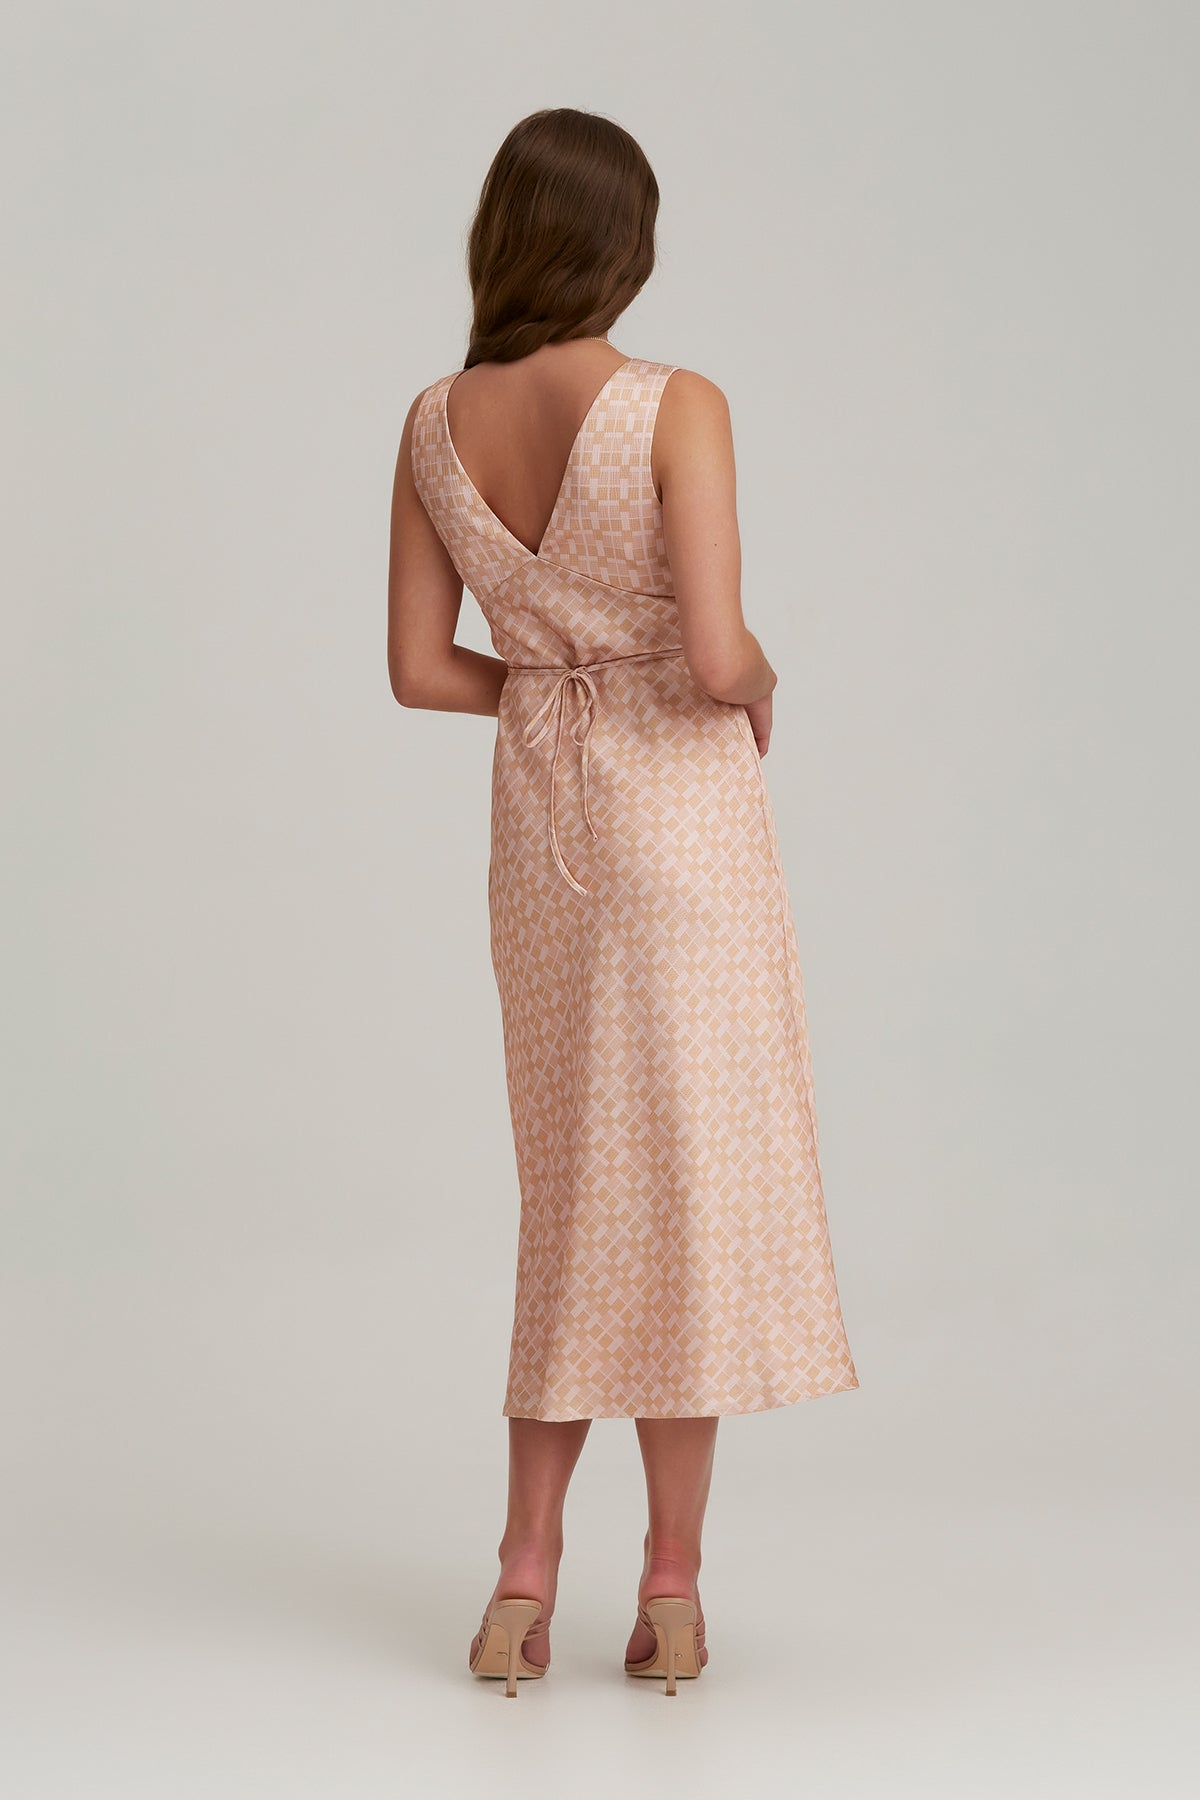 Finders - Luella Midi Dress - Blush Tile